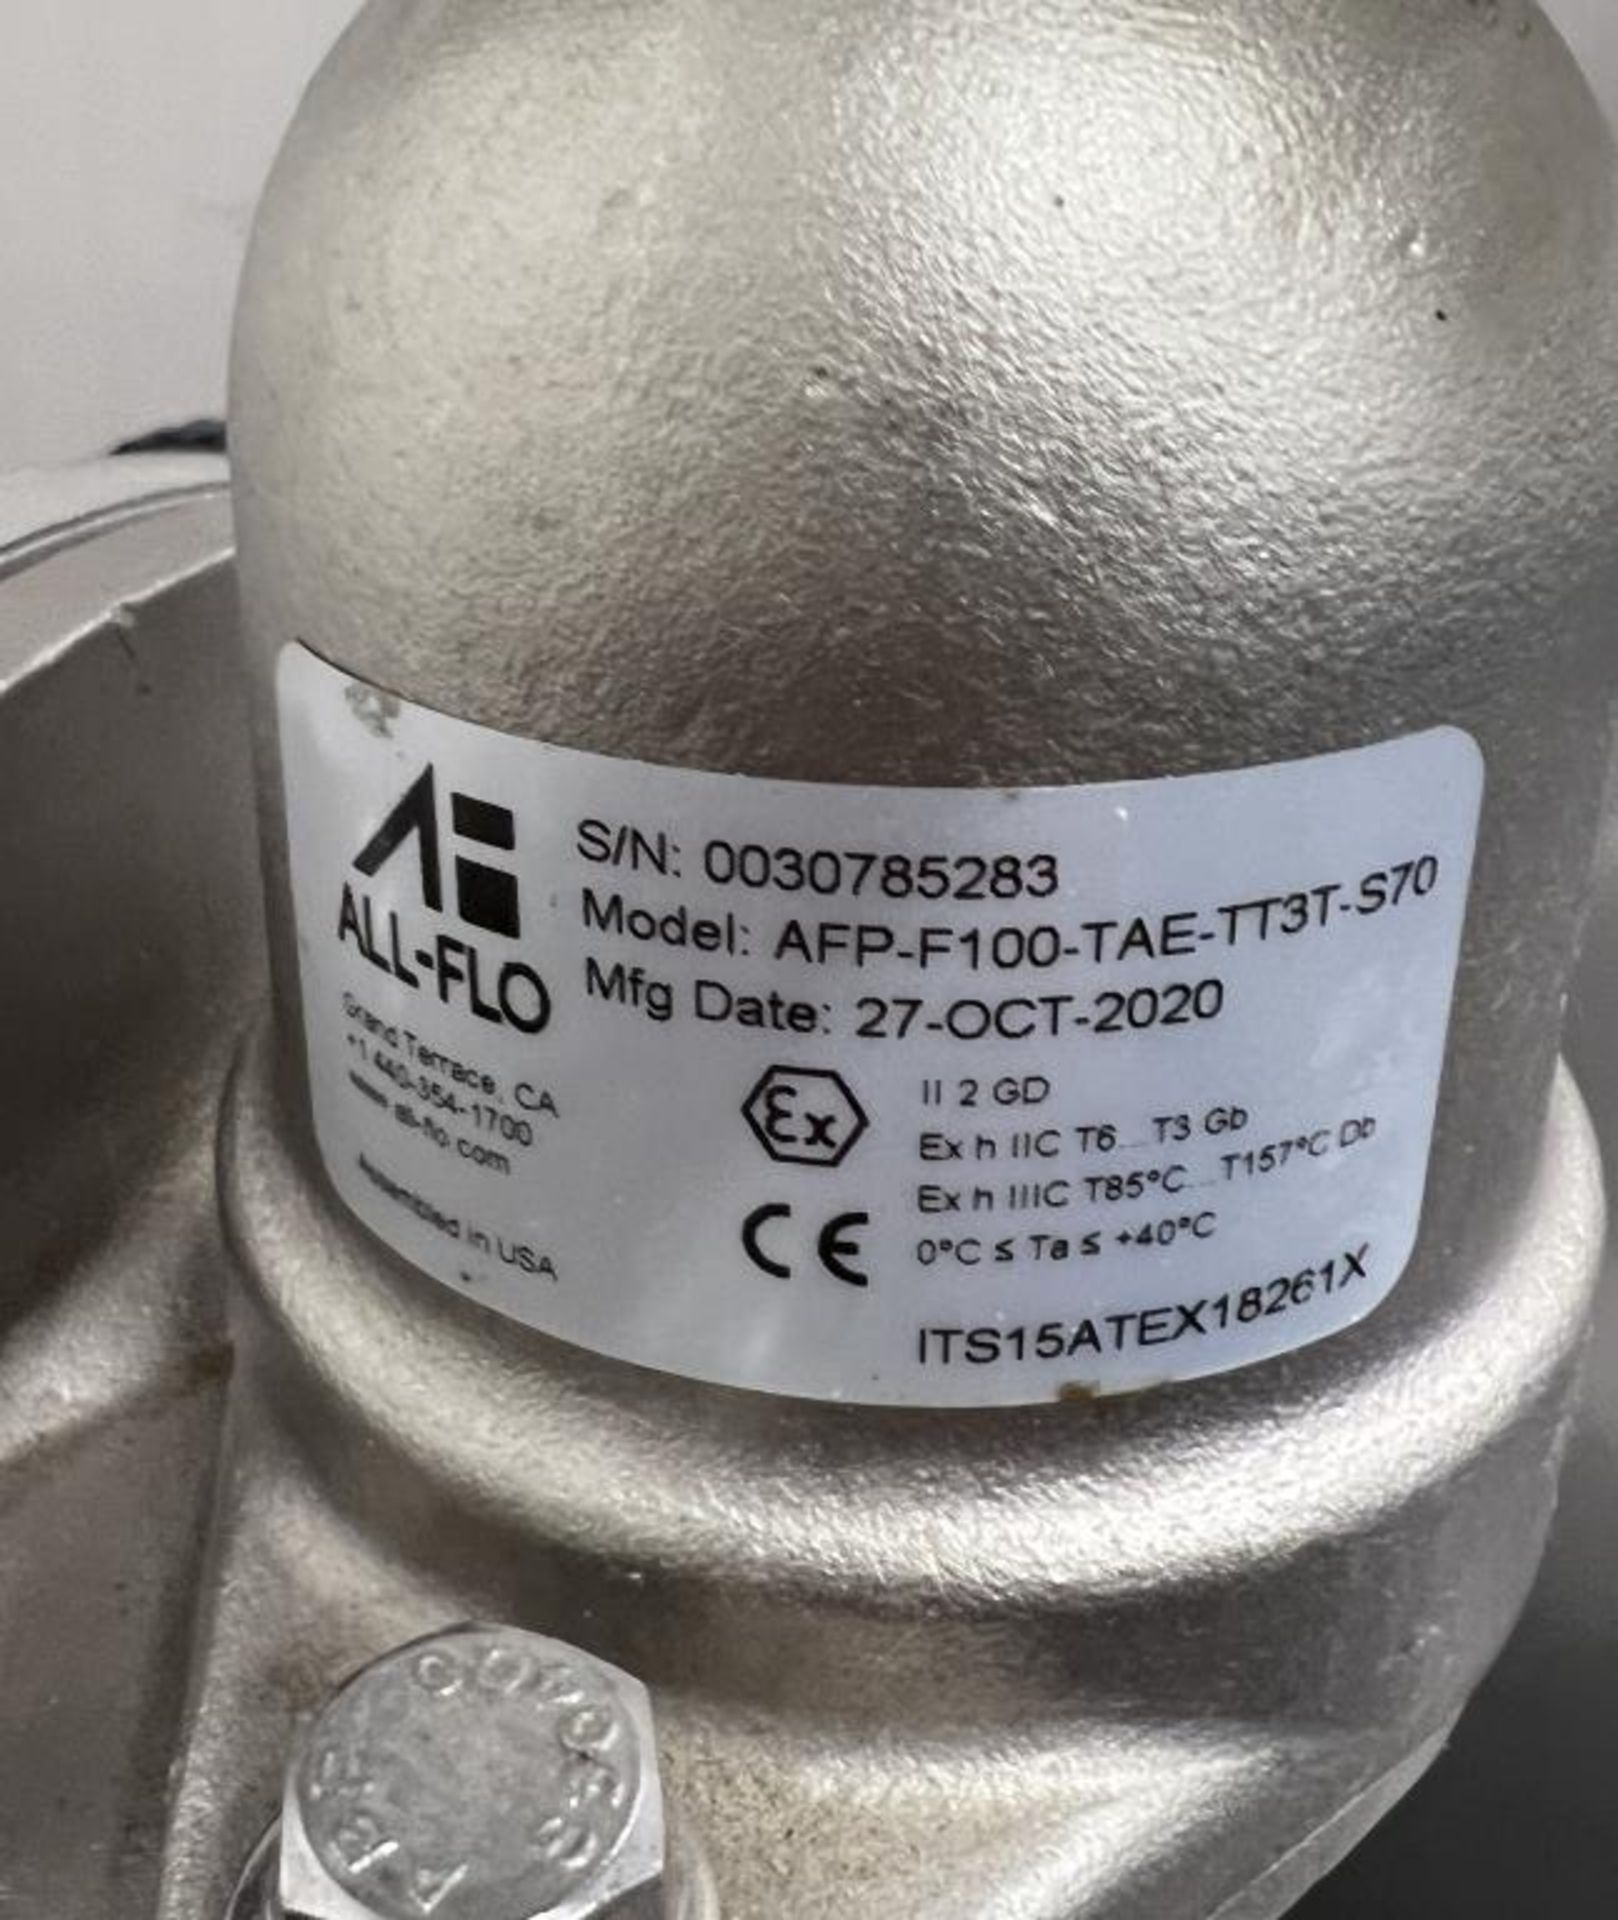 All-Flo AFP-F100-TAE-TT3T-S70 Diaphragm Pumps - Image 3 of 3